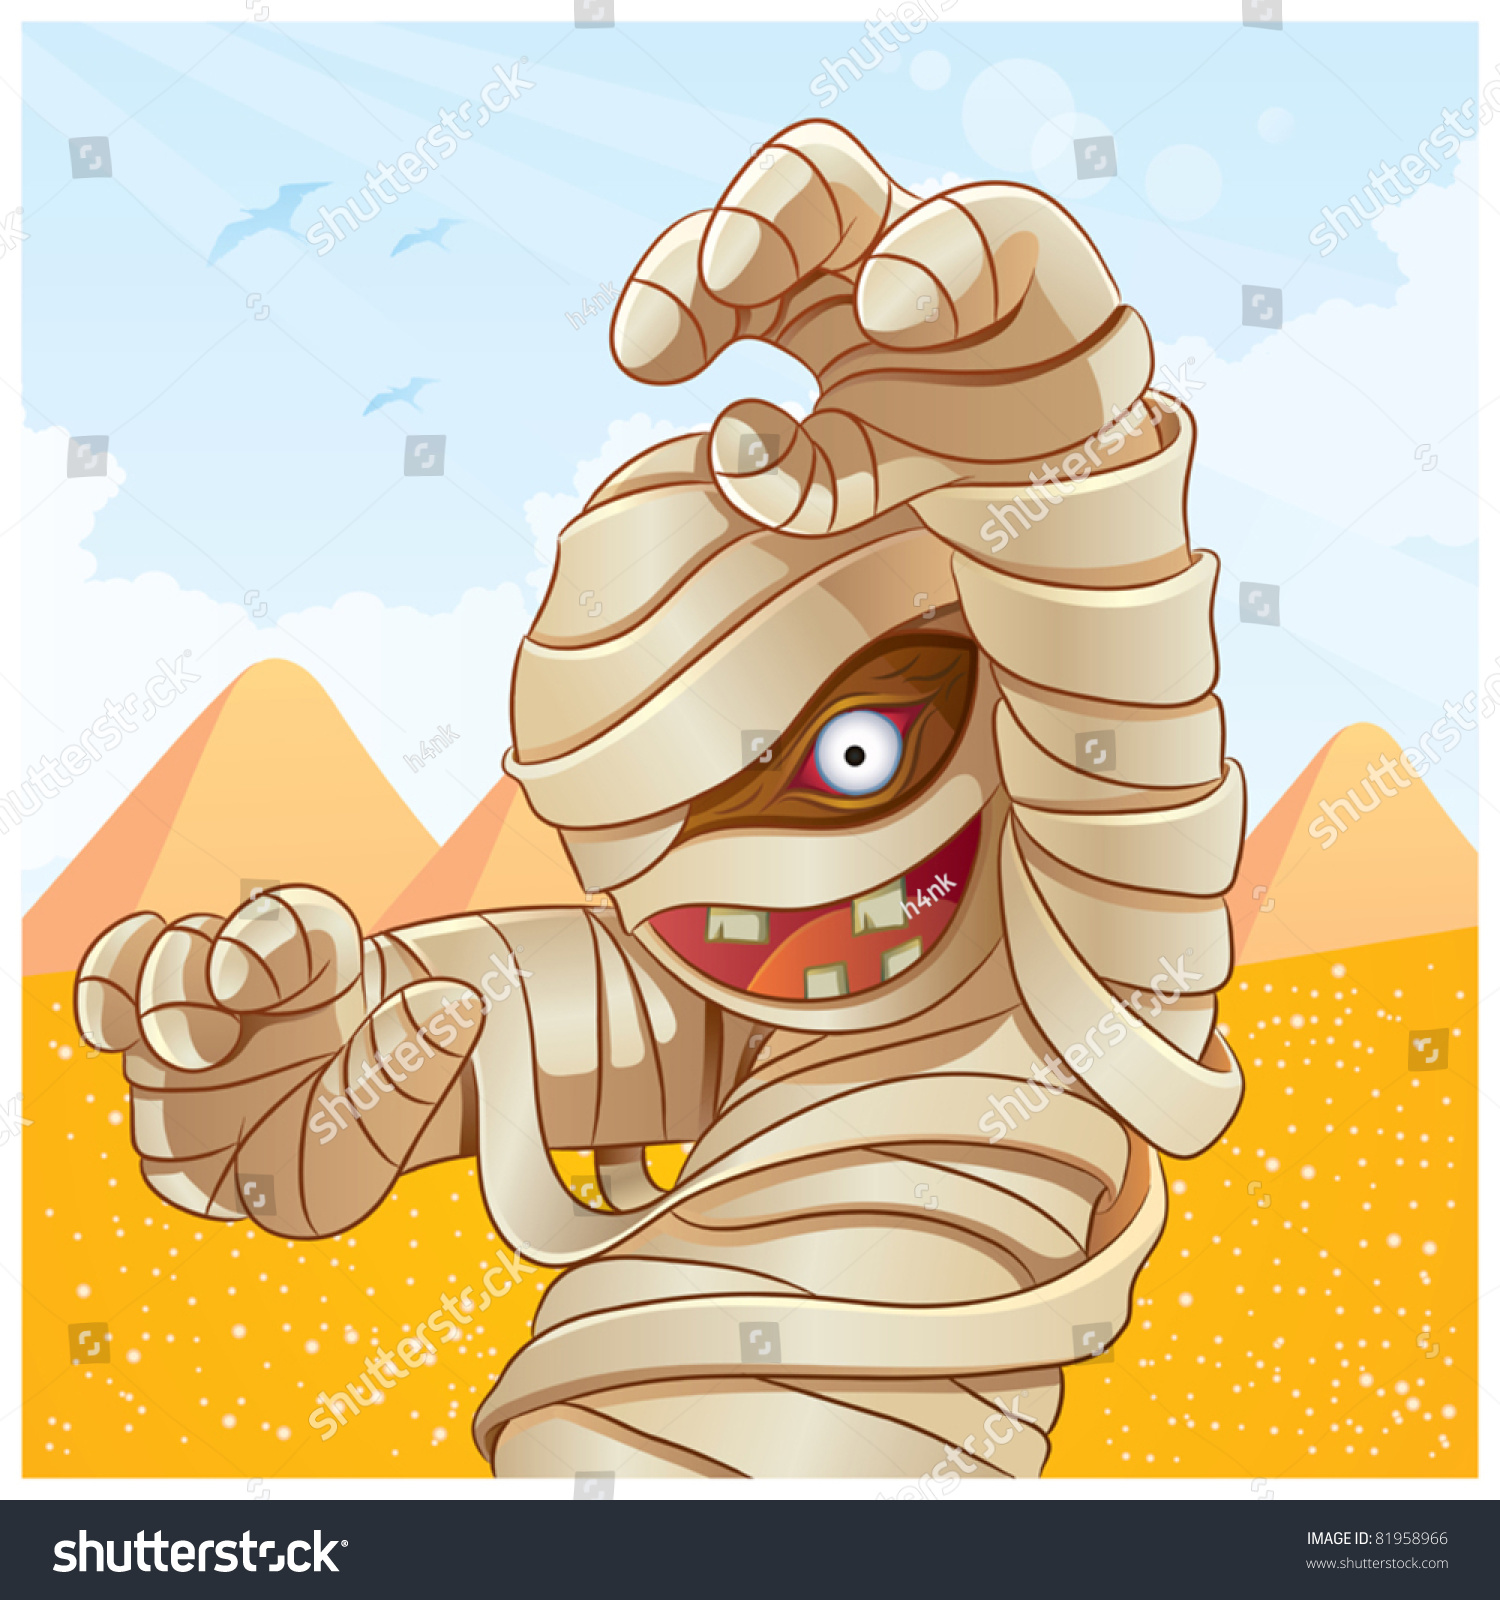 Mummy Cartoon Stock Vector 81958966 - Shutterstock